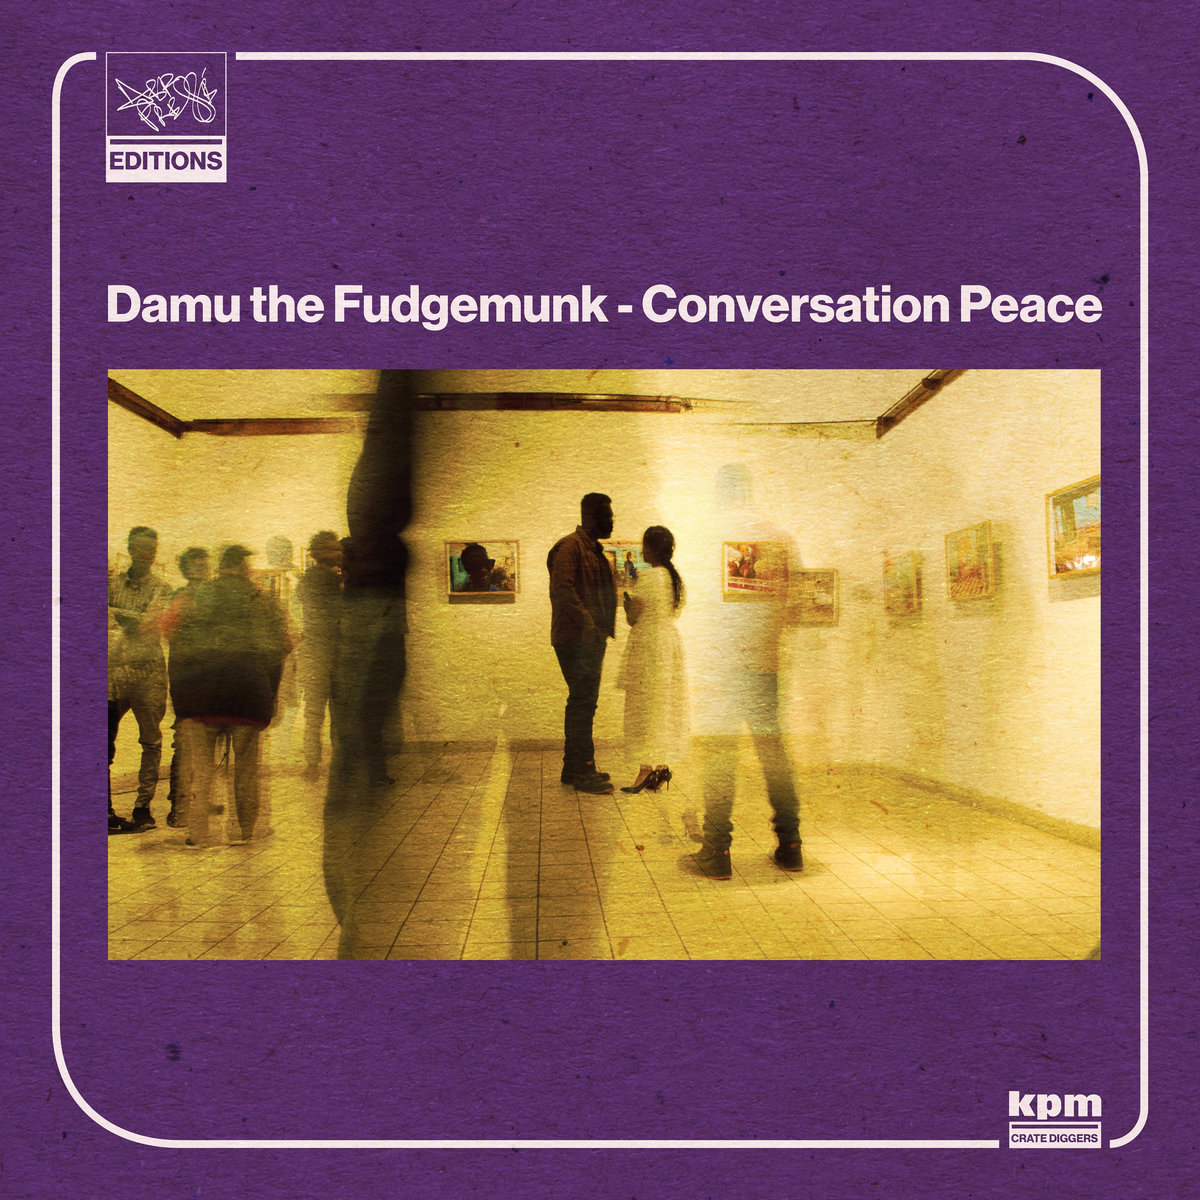 Conversation_peace_damu_the_fudgemunk